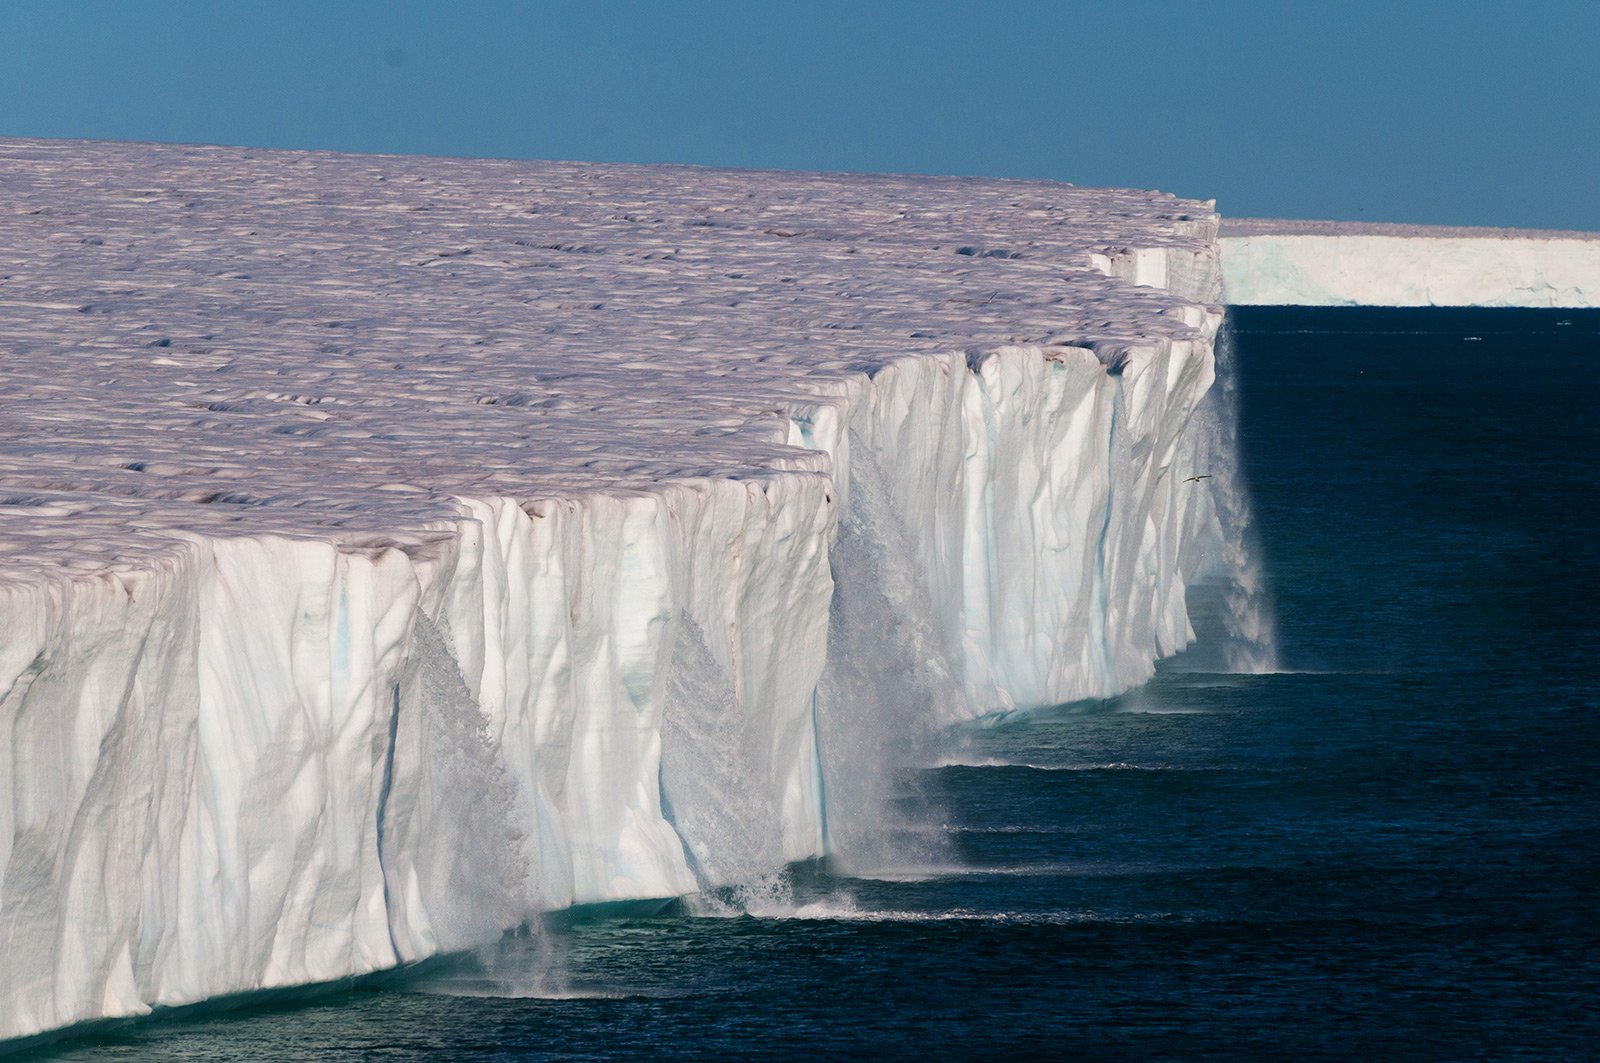 Austfonna Ice Cap, Spitsbergen